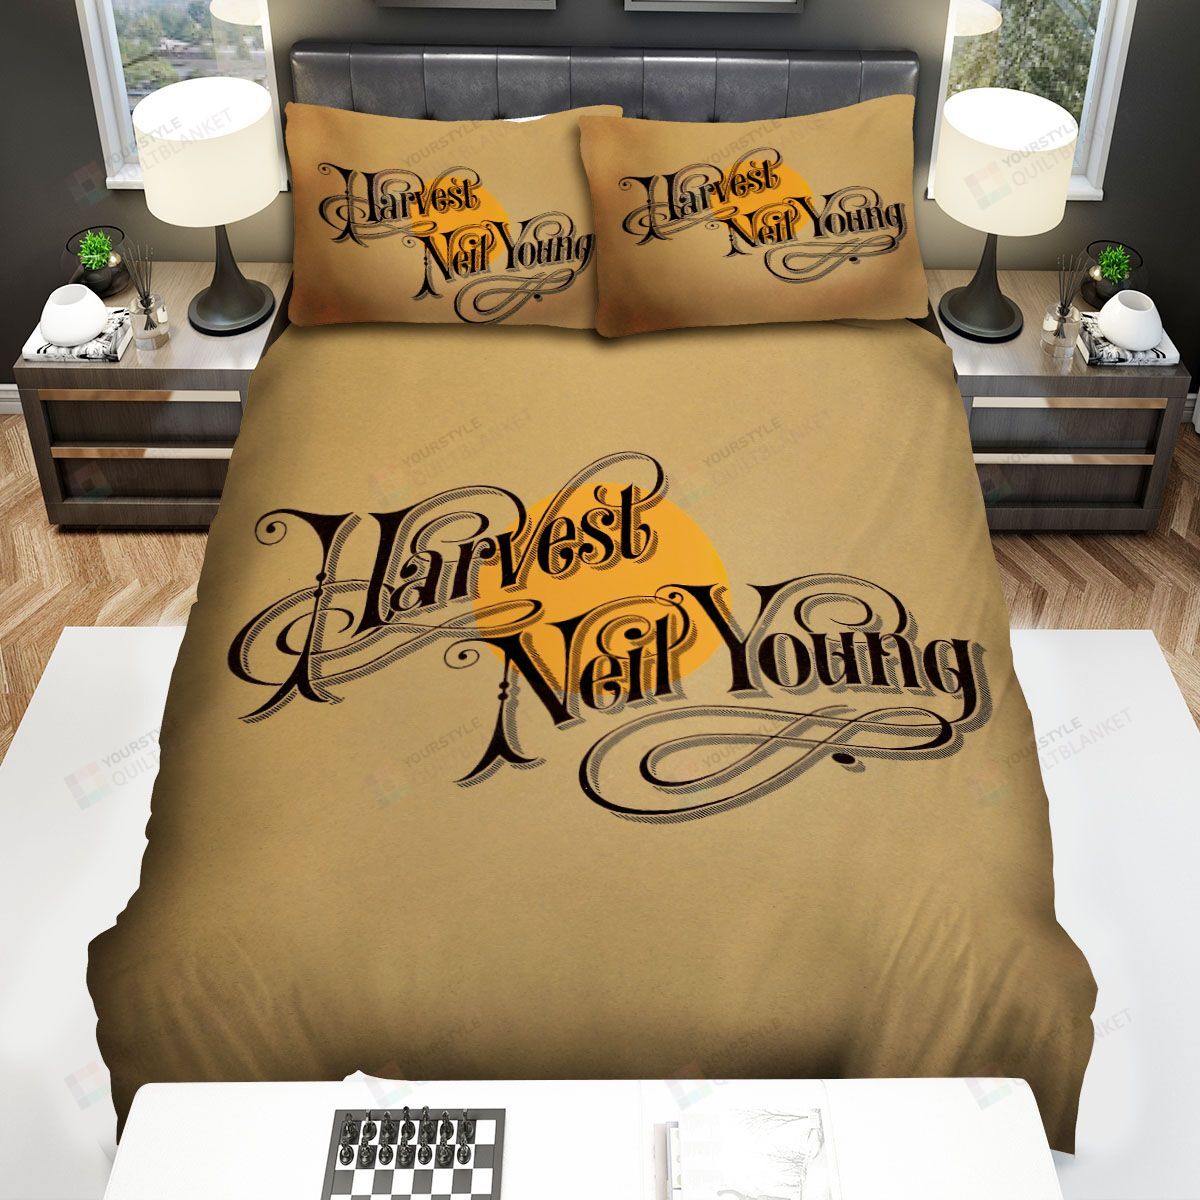 Neil Young Album Cover Harvest Bed Sheets Spread Comforter Duvet Cover Bedding Sets